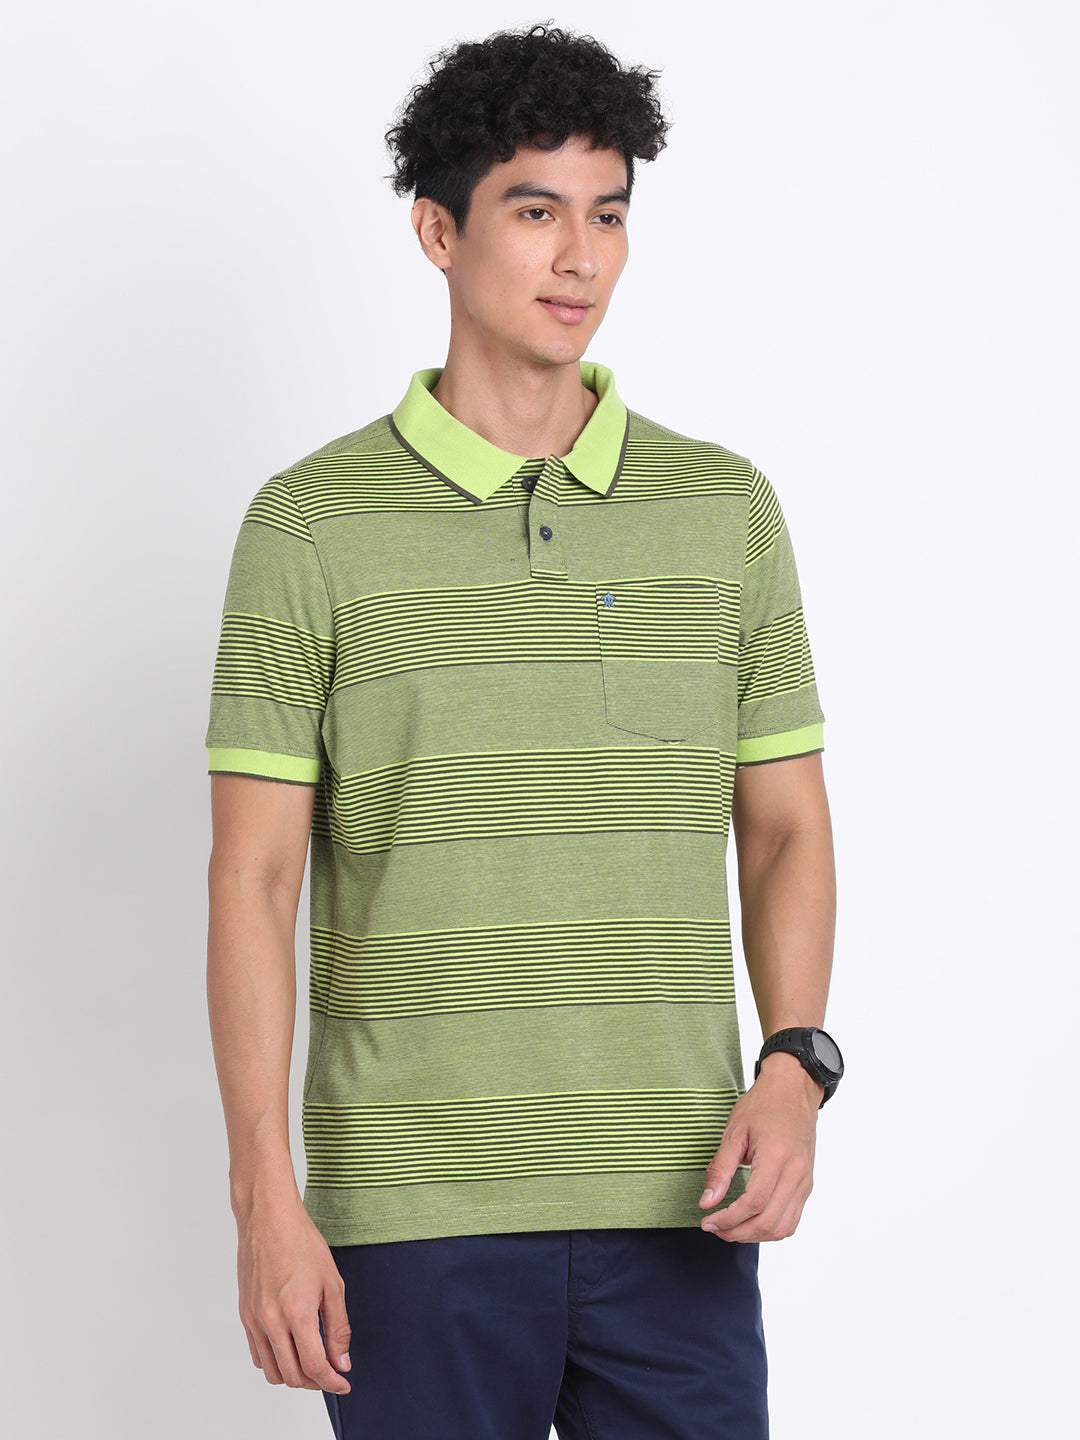 100% Cotton Green Striped Polo Neck Half Sleeve Casual T-Shirt